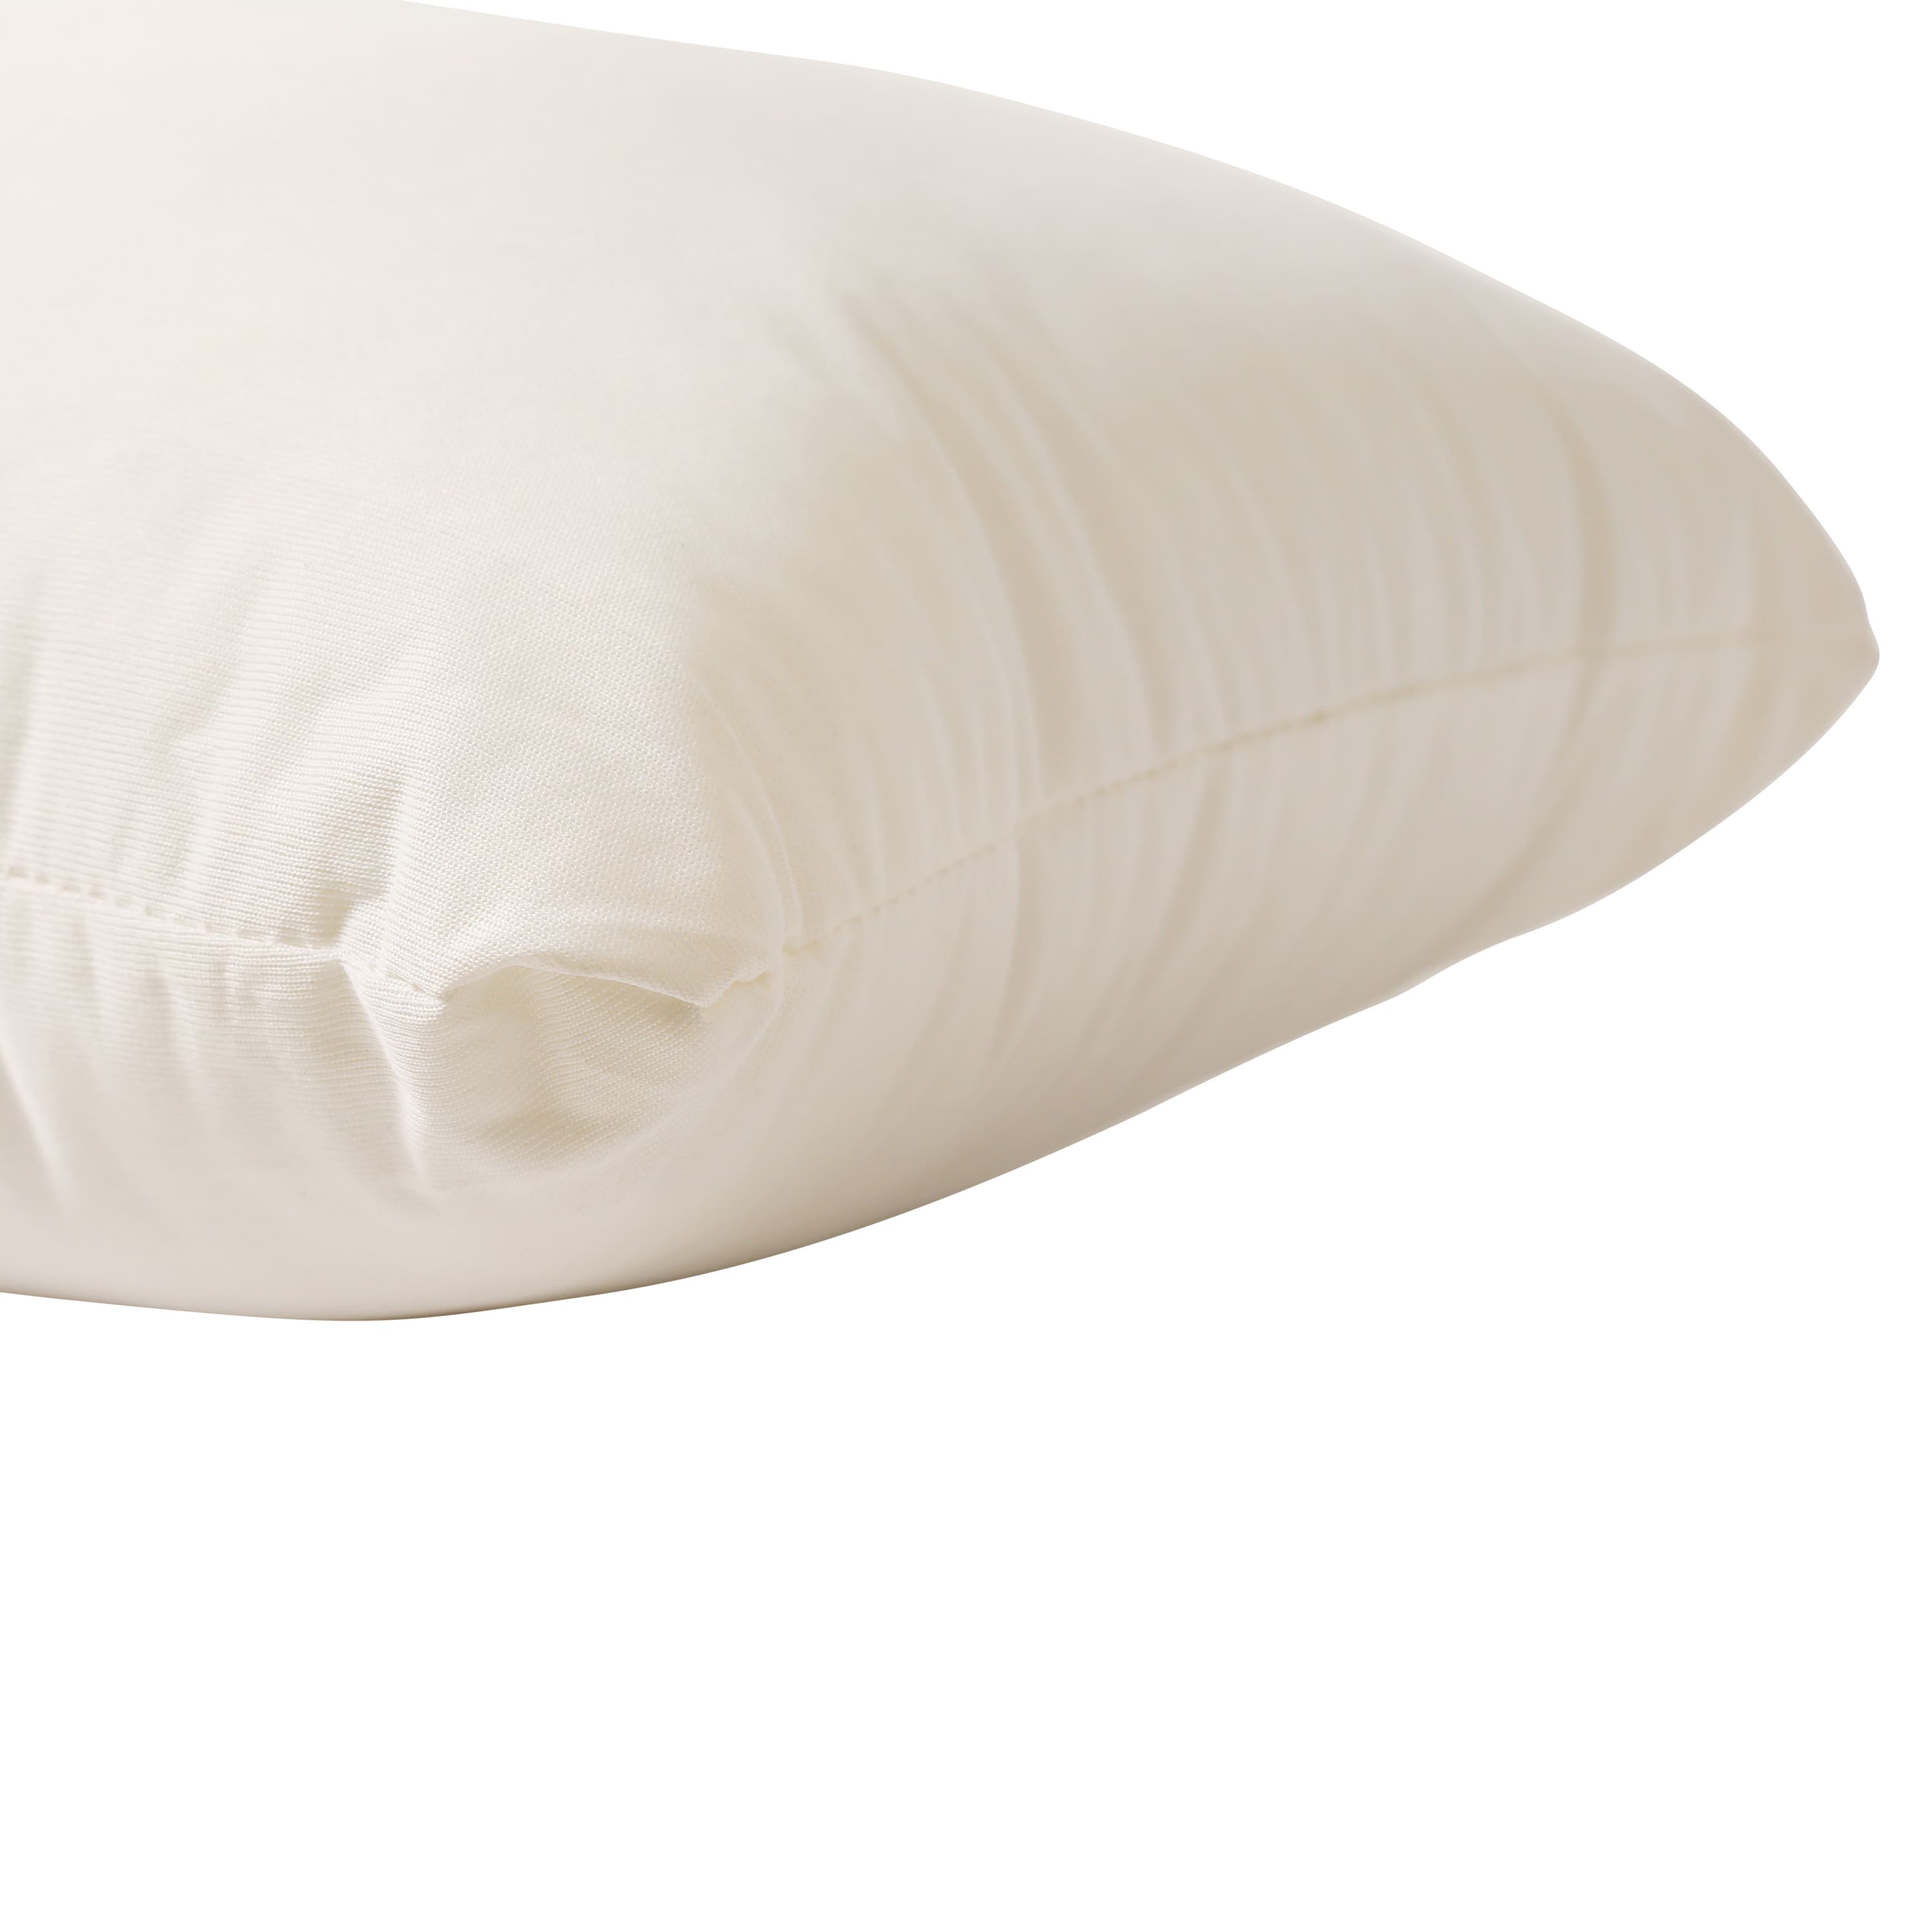 Fairfield Weather Soft Indoor/Outdoor Pillow 12 inch x 18 inch